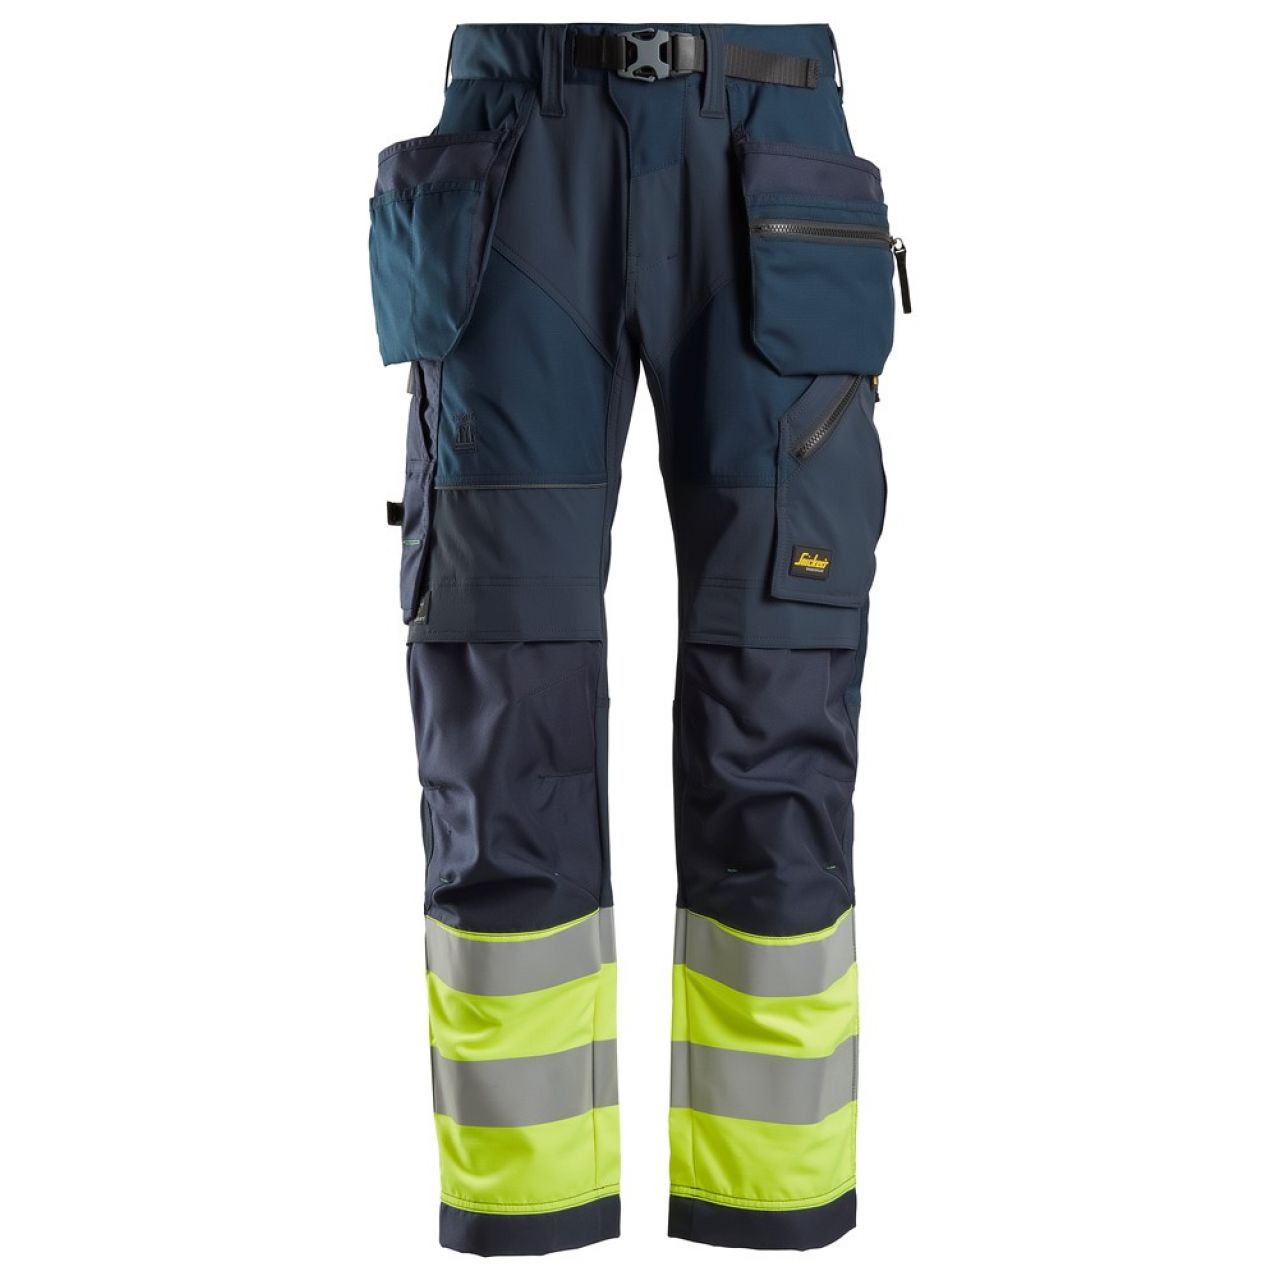 6931 Pantalones largos de trabajo de alta visibilidad clase 1 con bolsillos flotantes FlexiWork azul marino-amarillo talla 156